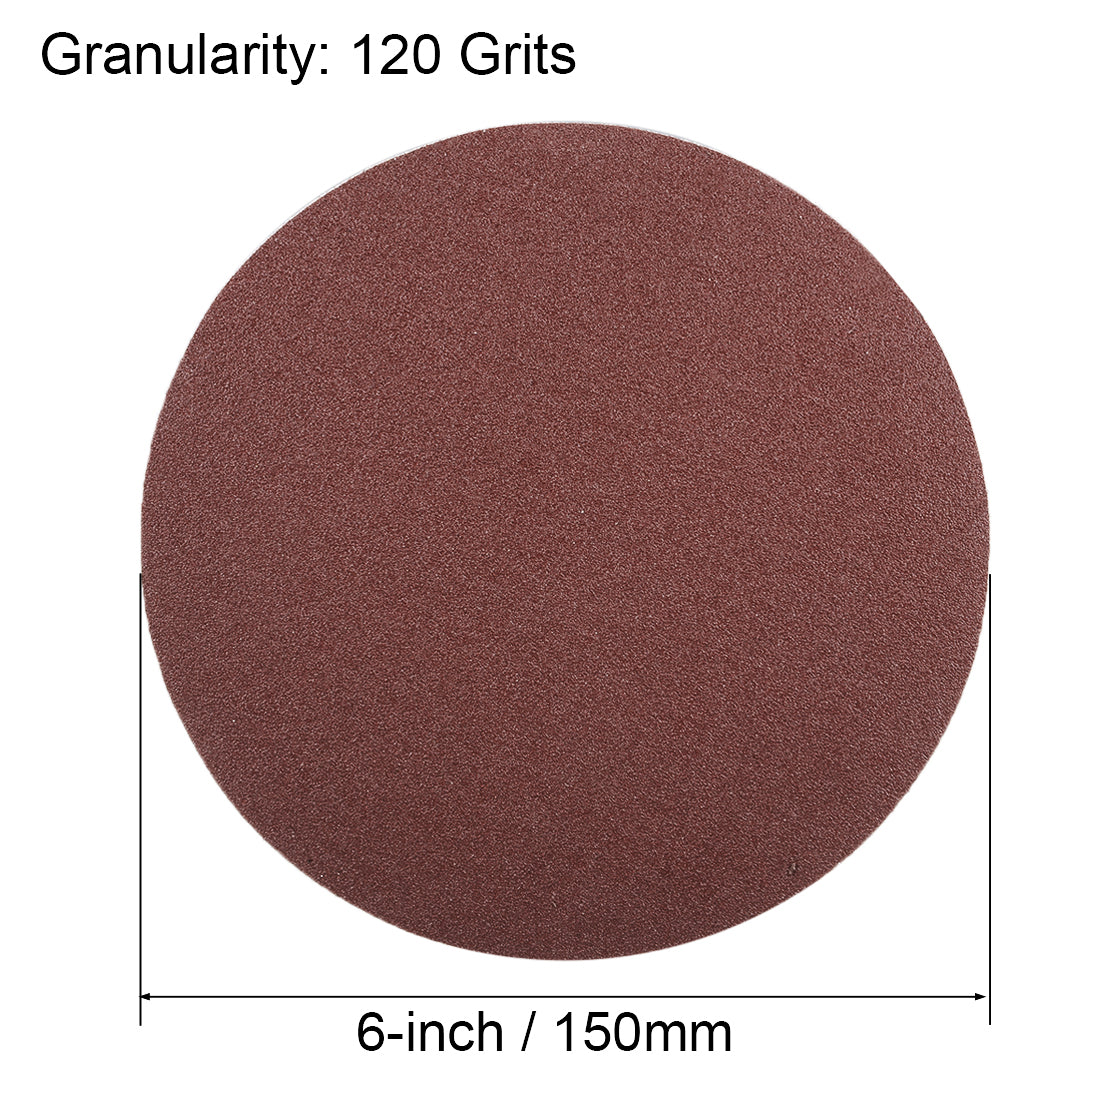 uxcell Uxcell 6-inch 120-Grits PSA Sanding Disc, Adhesive-Backed Sanding Sheets Aluminum Oxide Sandpaper for Random Orbital Sander 10pcs